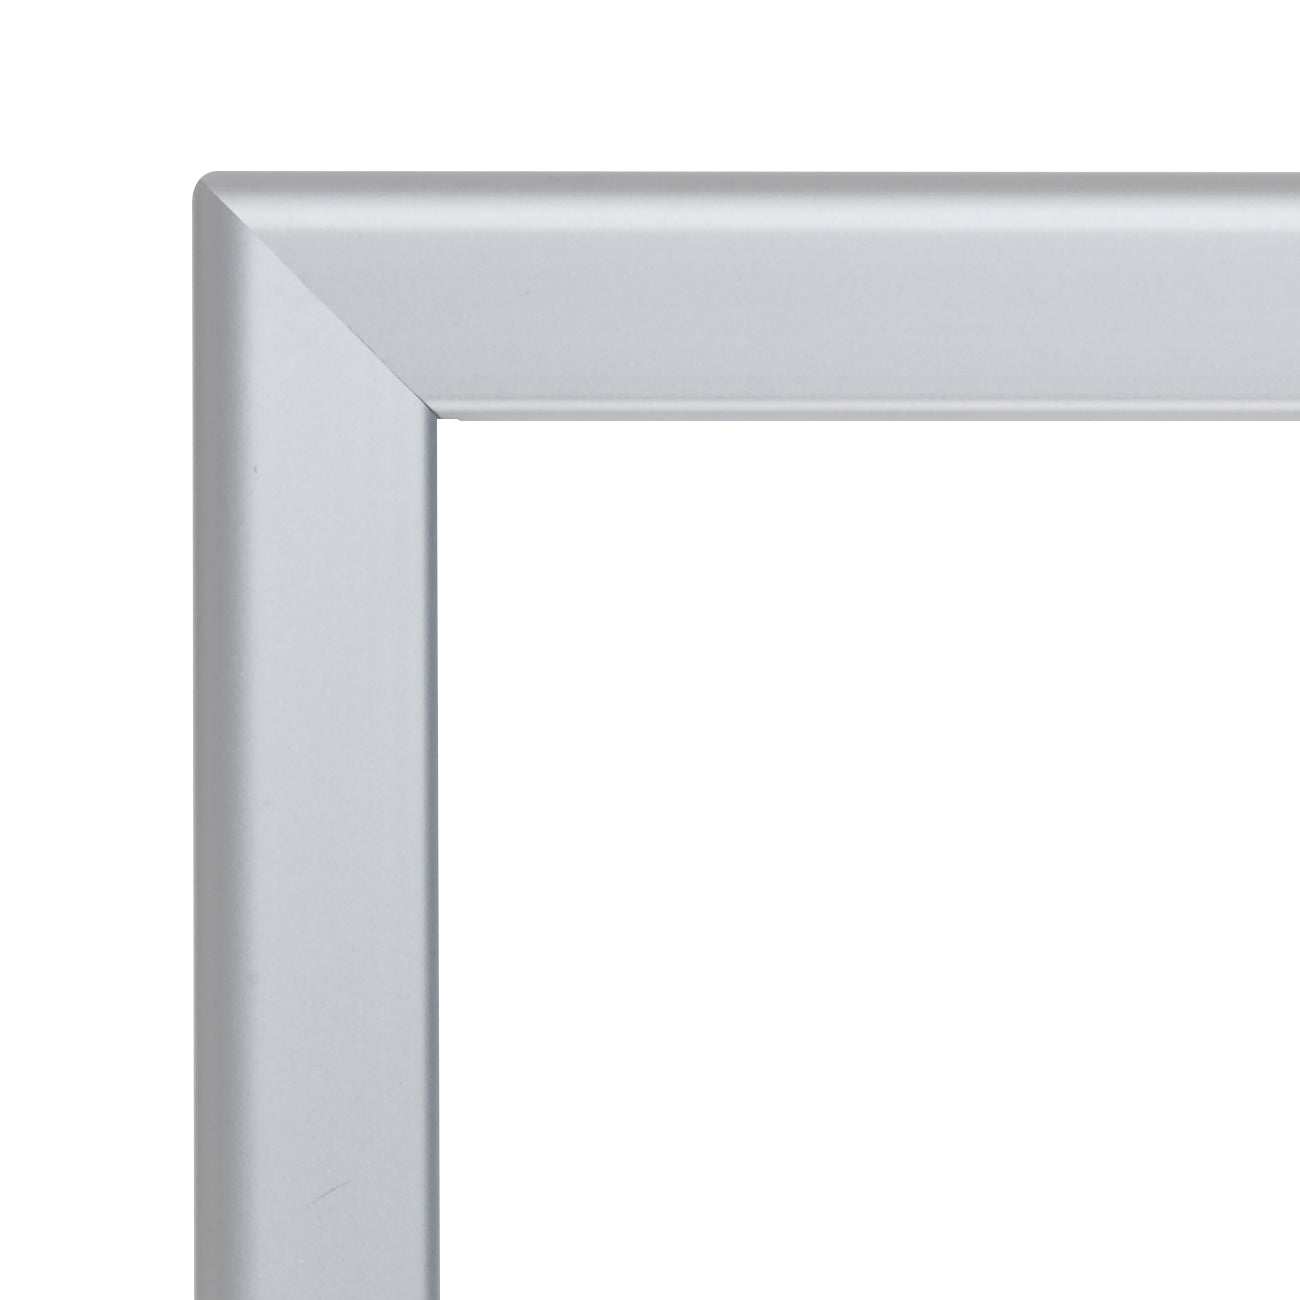 27x41 Silver SnapeZo® Snap Frame - 1.25" Profile